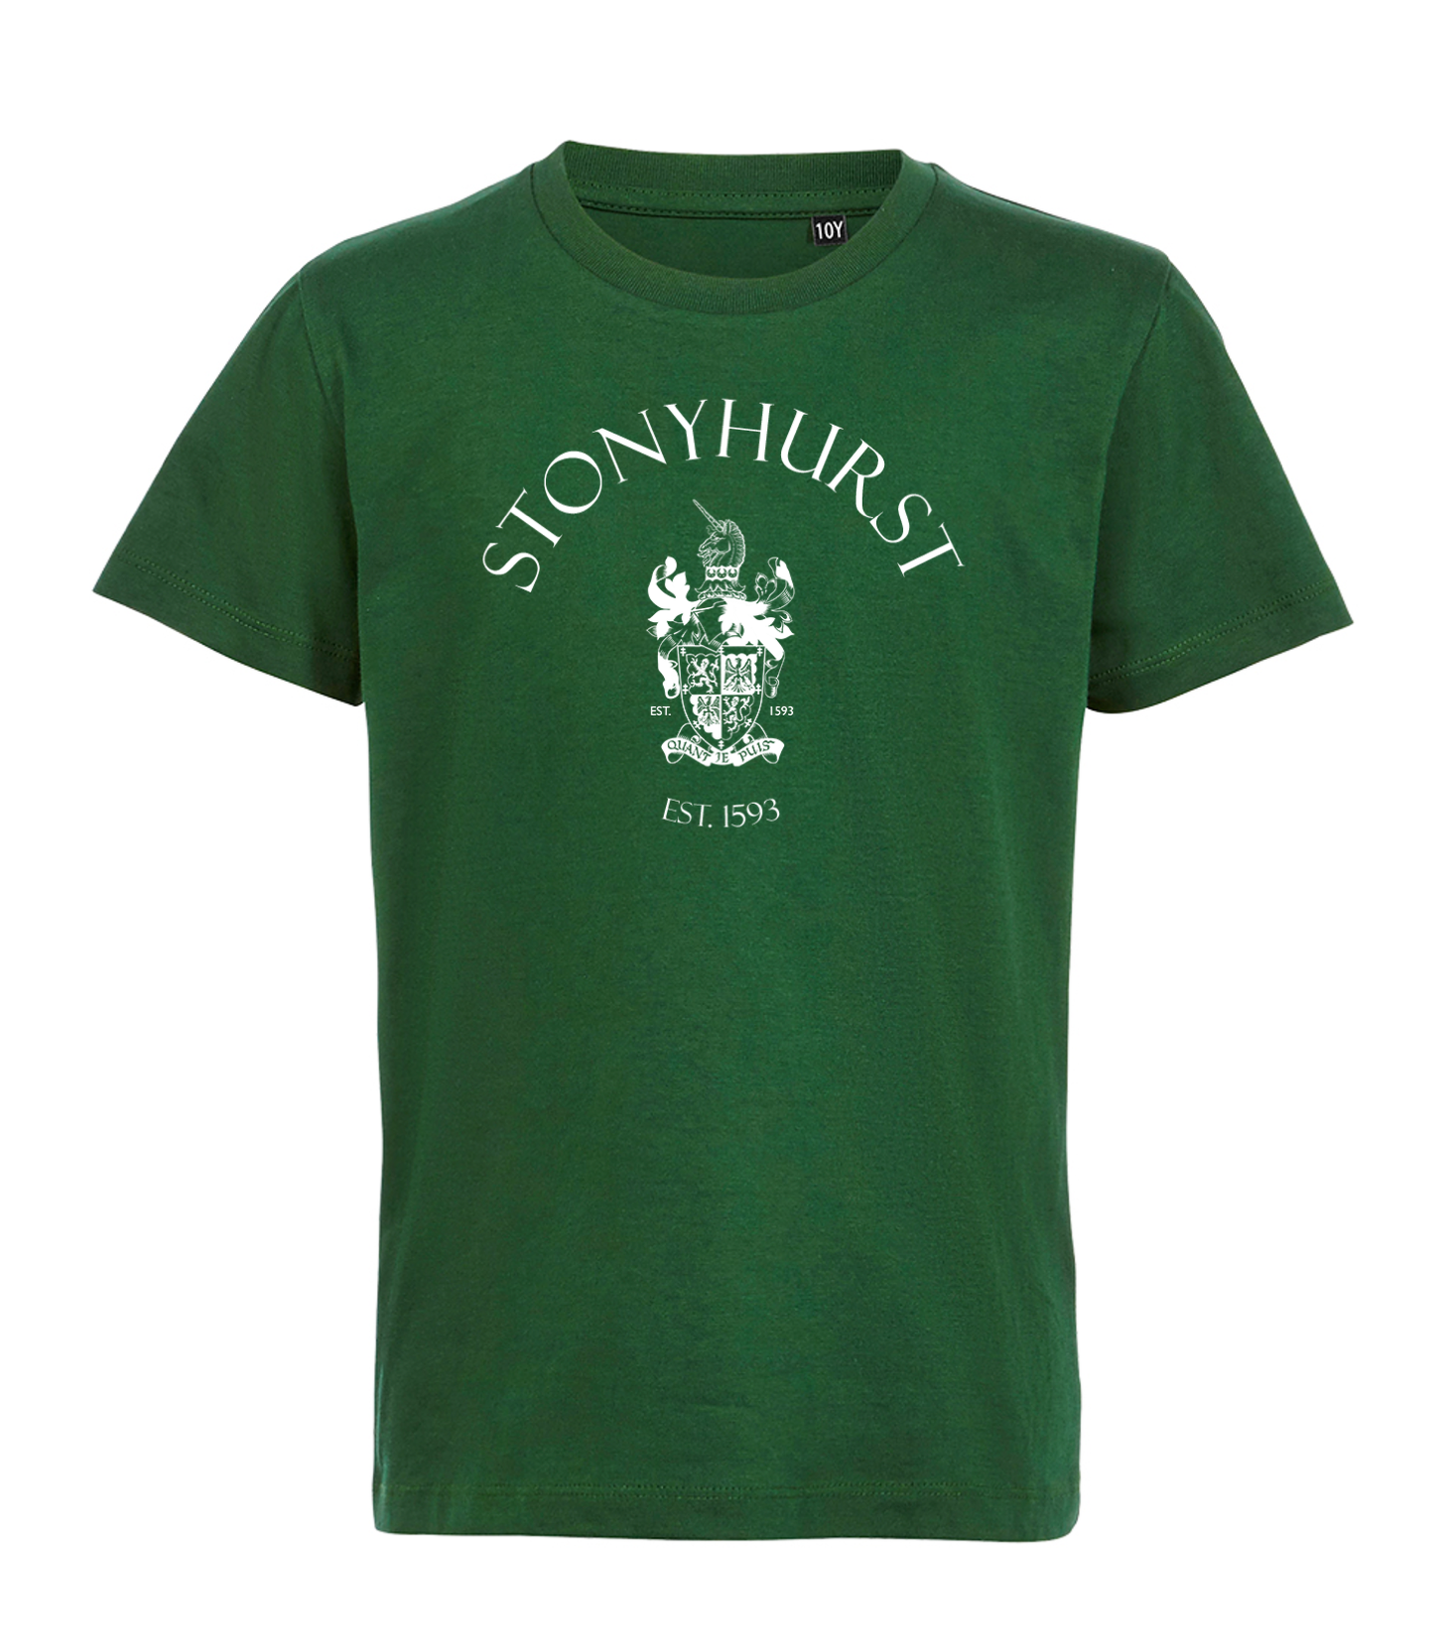 Stonyhurst White Logo Green Organic T-Shirt (Childrens)